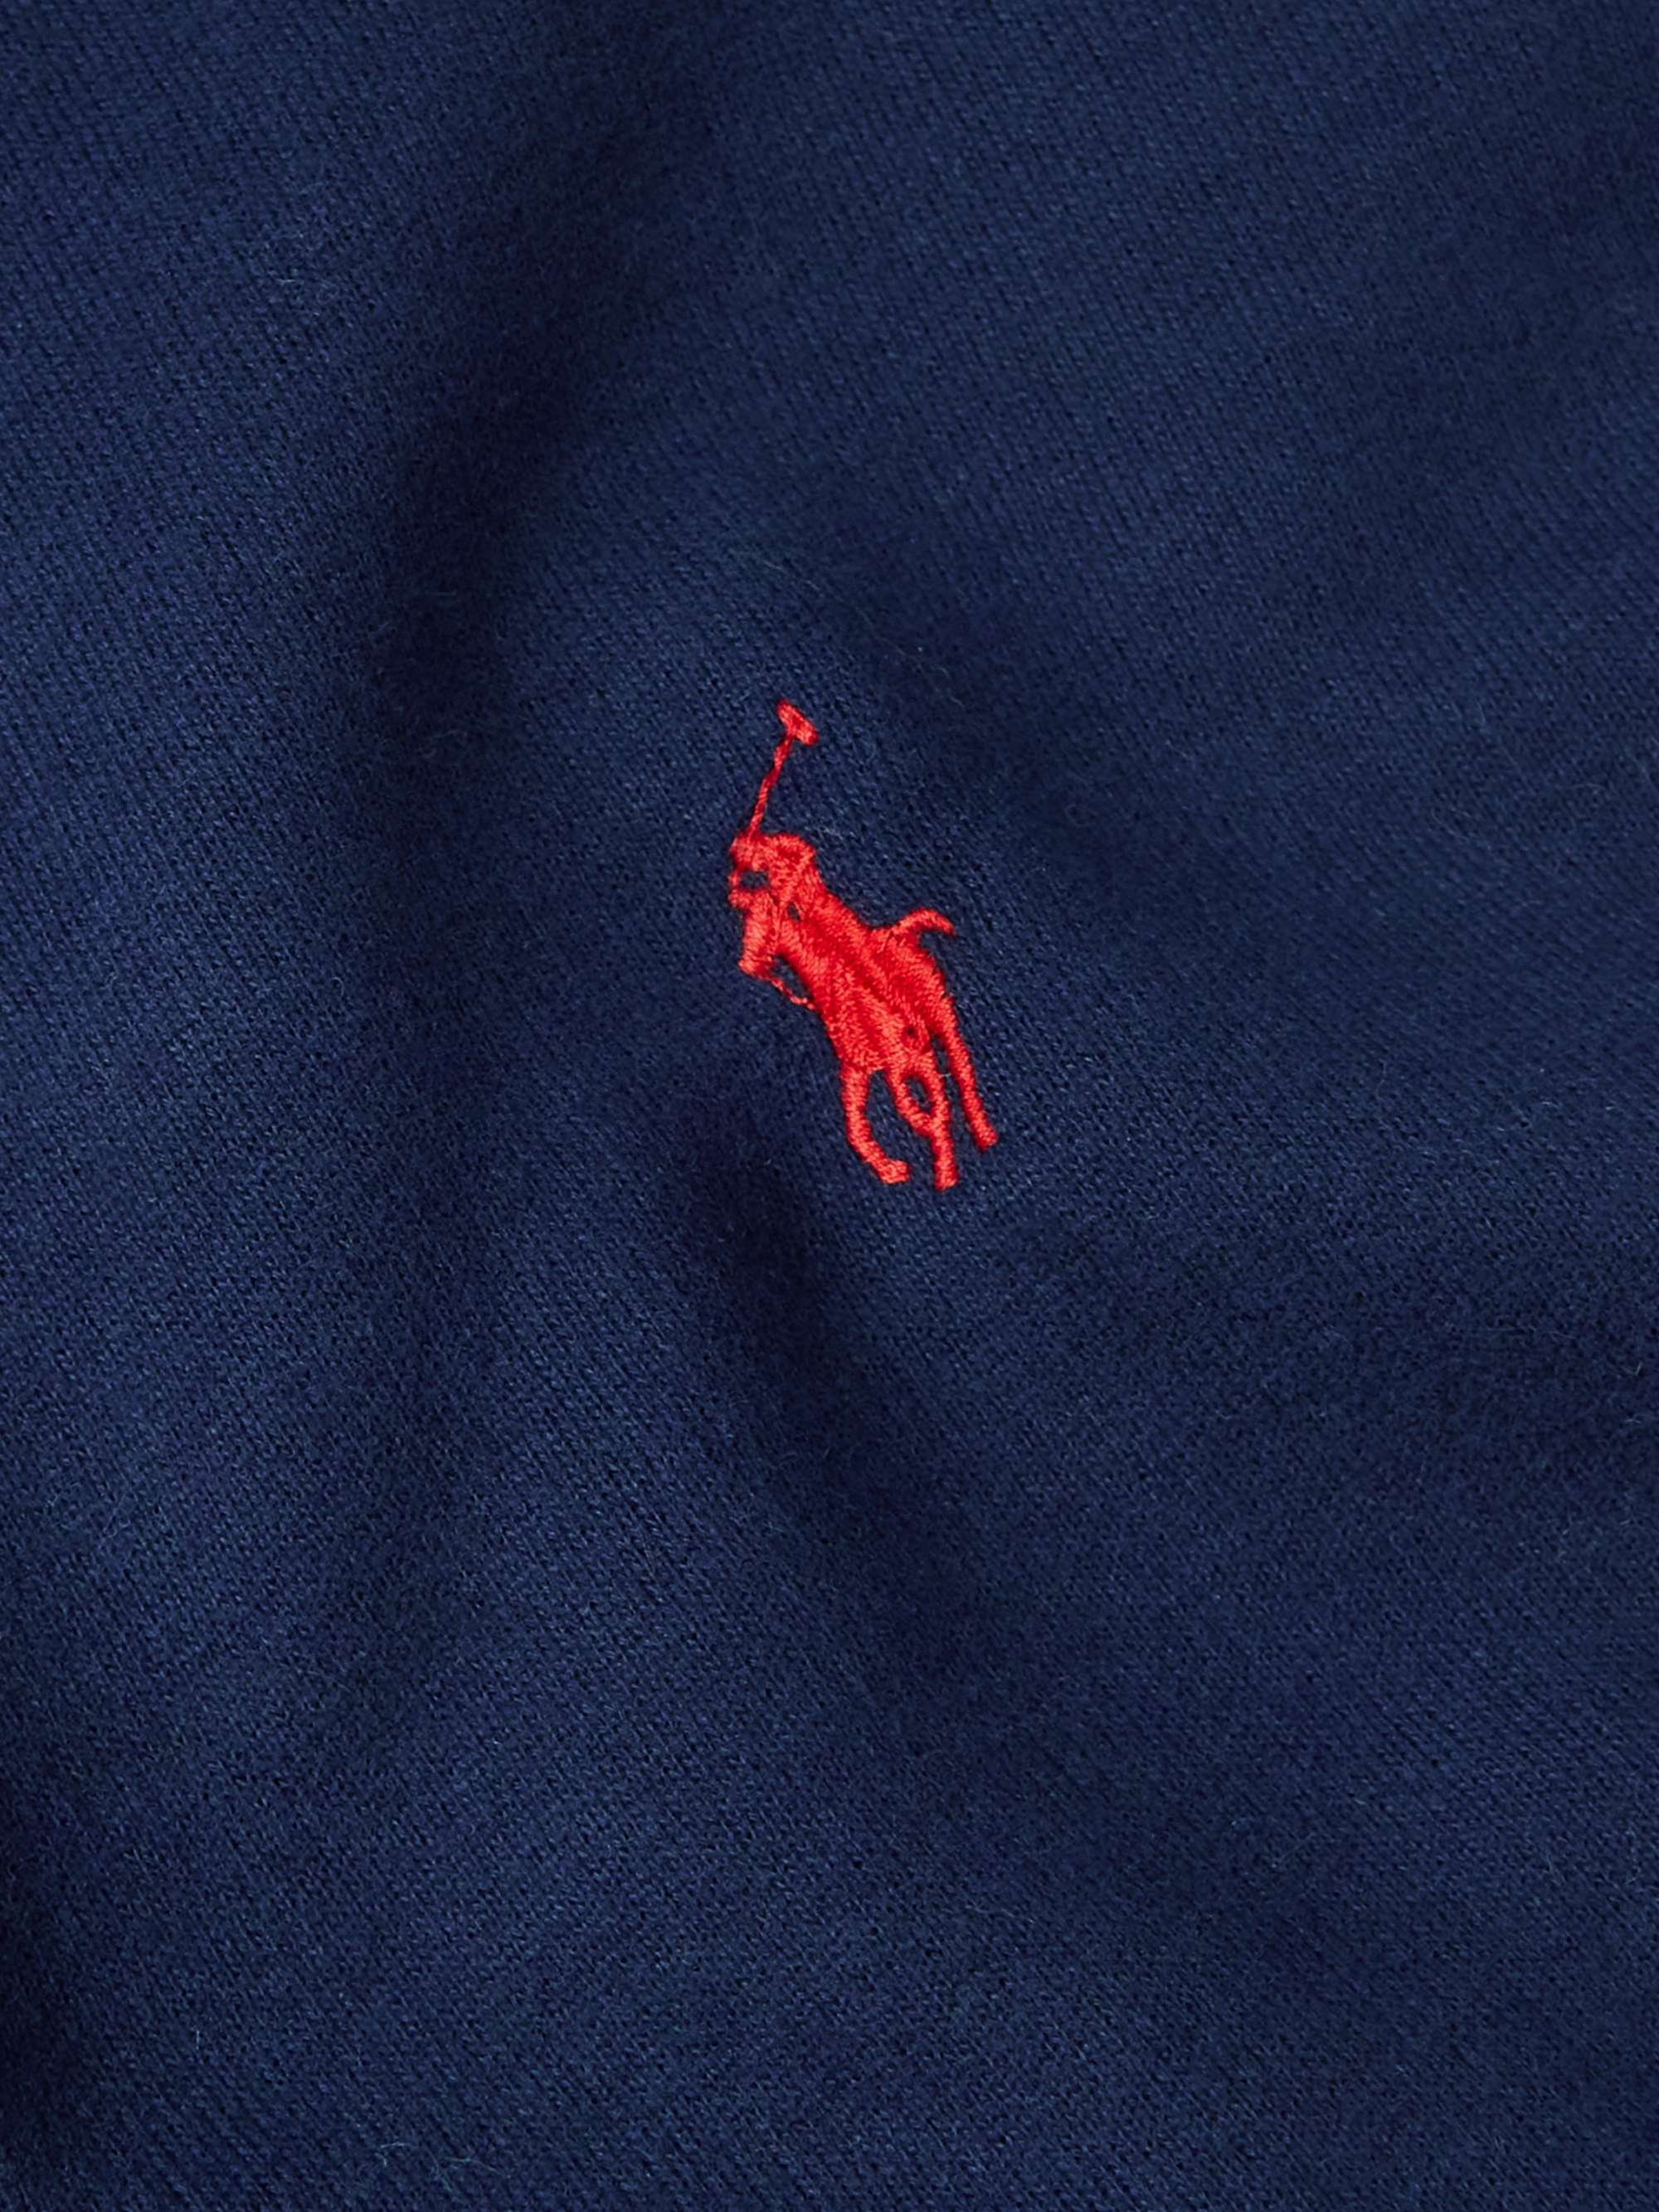 POLO RALPH LAUREN Logo-Embroidered Cotton-Blend Jersey Half-Zip Sweatshirt